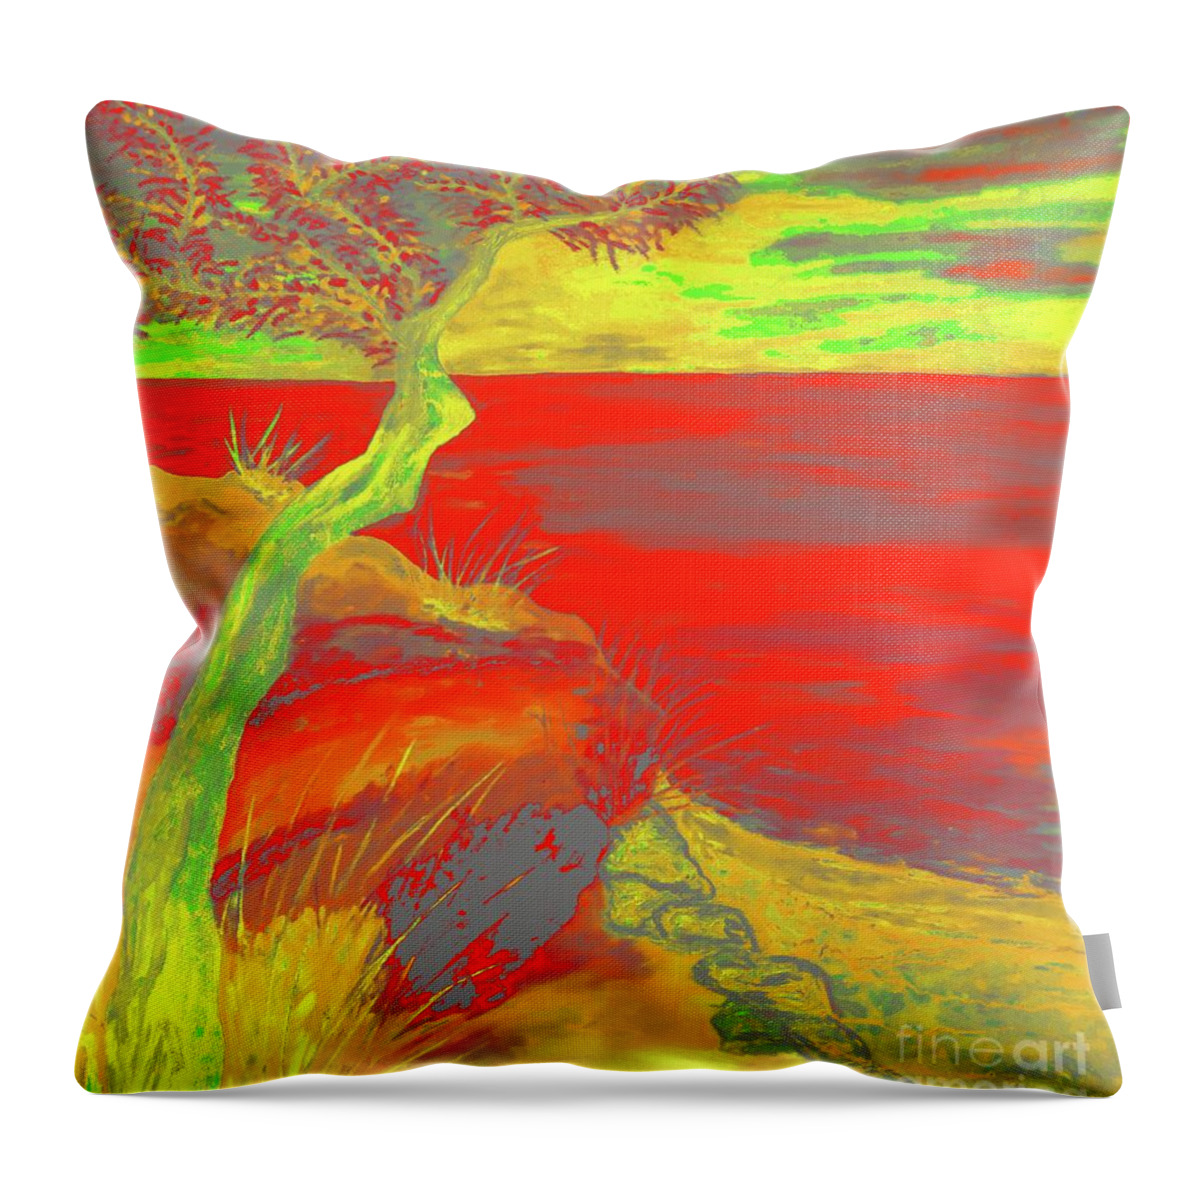 Loredana Messina Throw Pillow featuring the painting Horizon by Loredana Messina